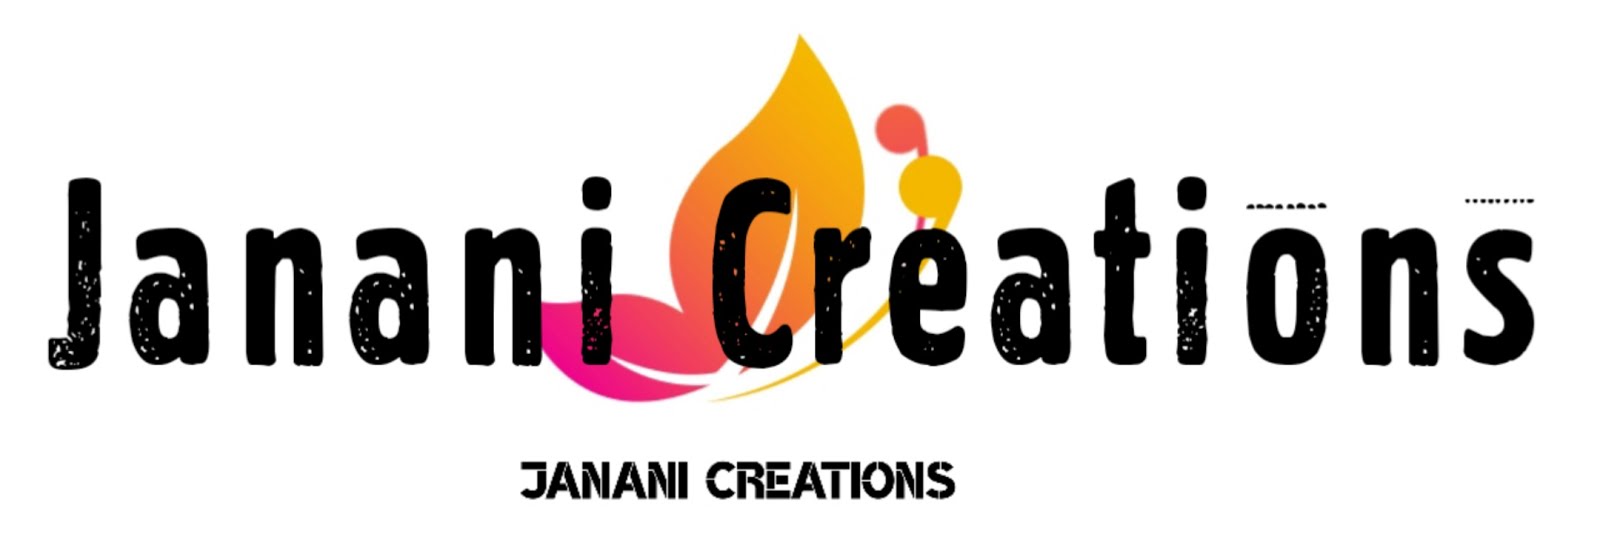 JANANI CREATIONS QUOTES